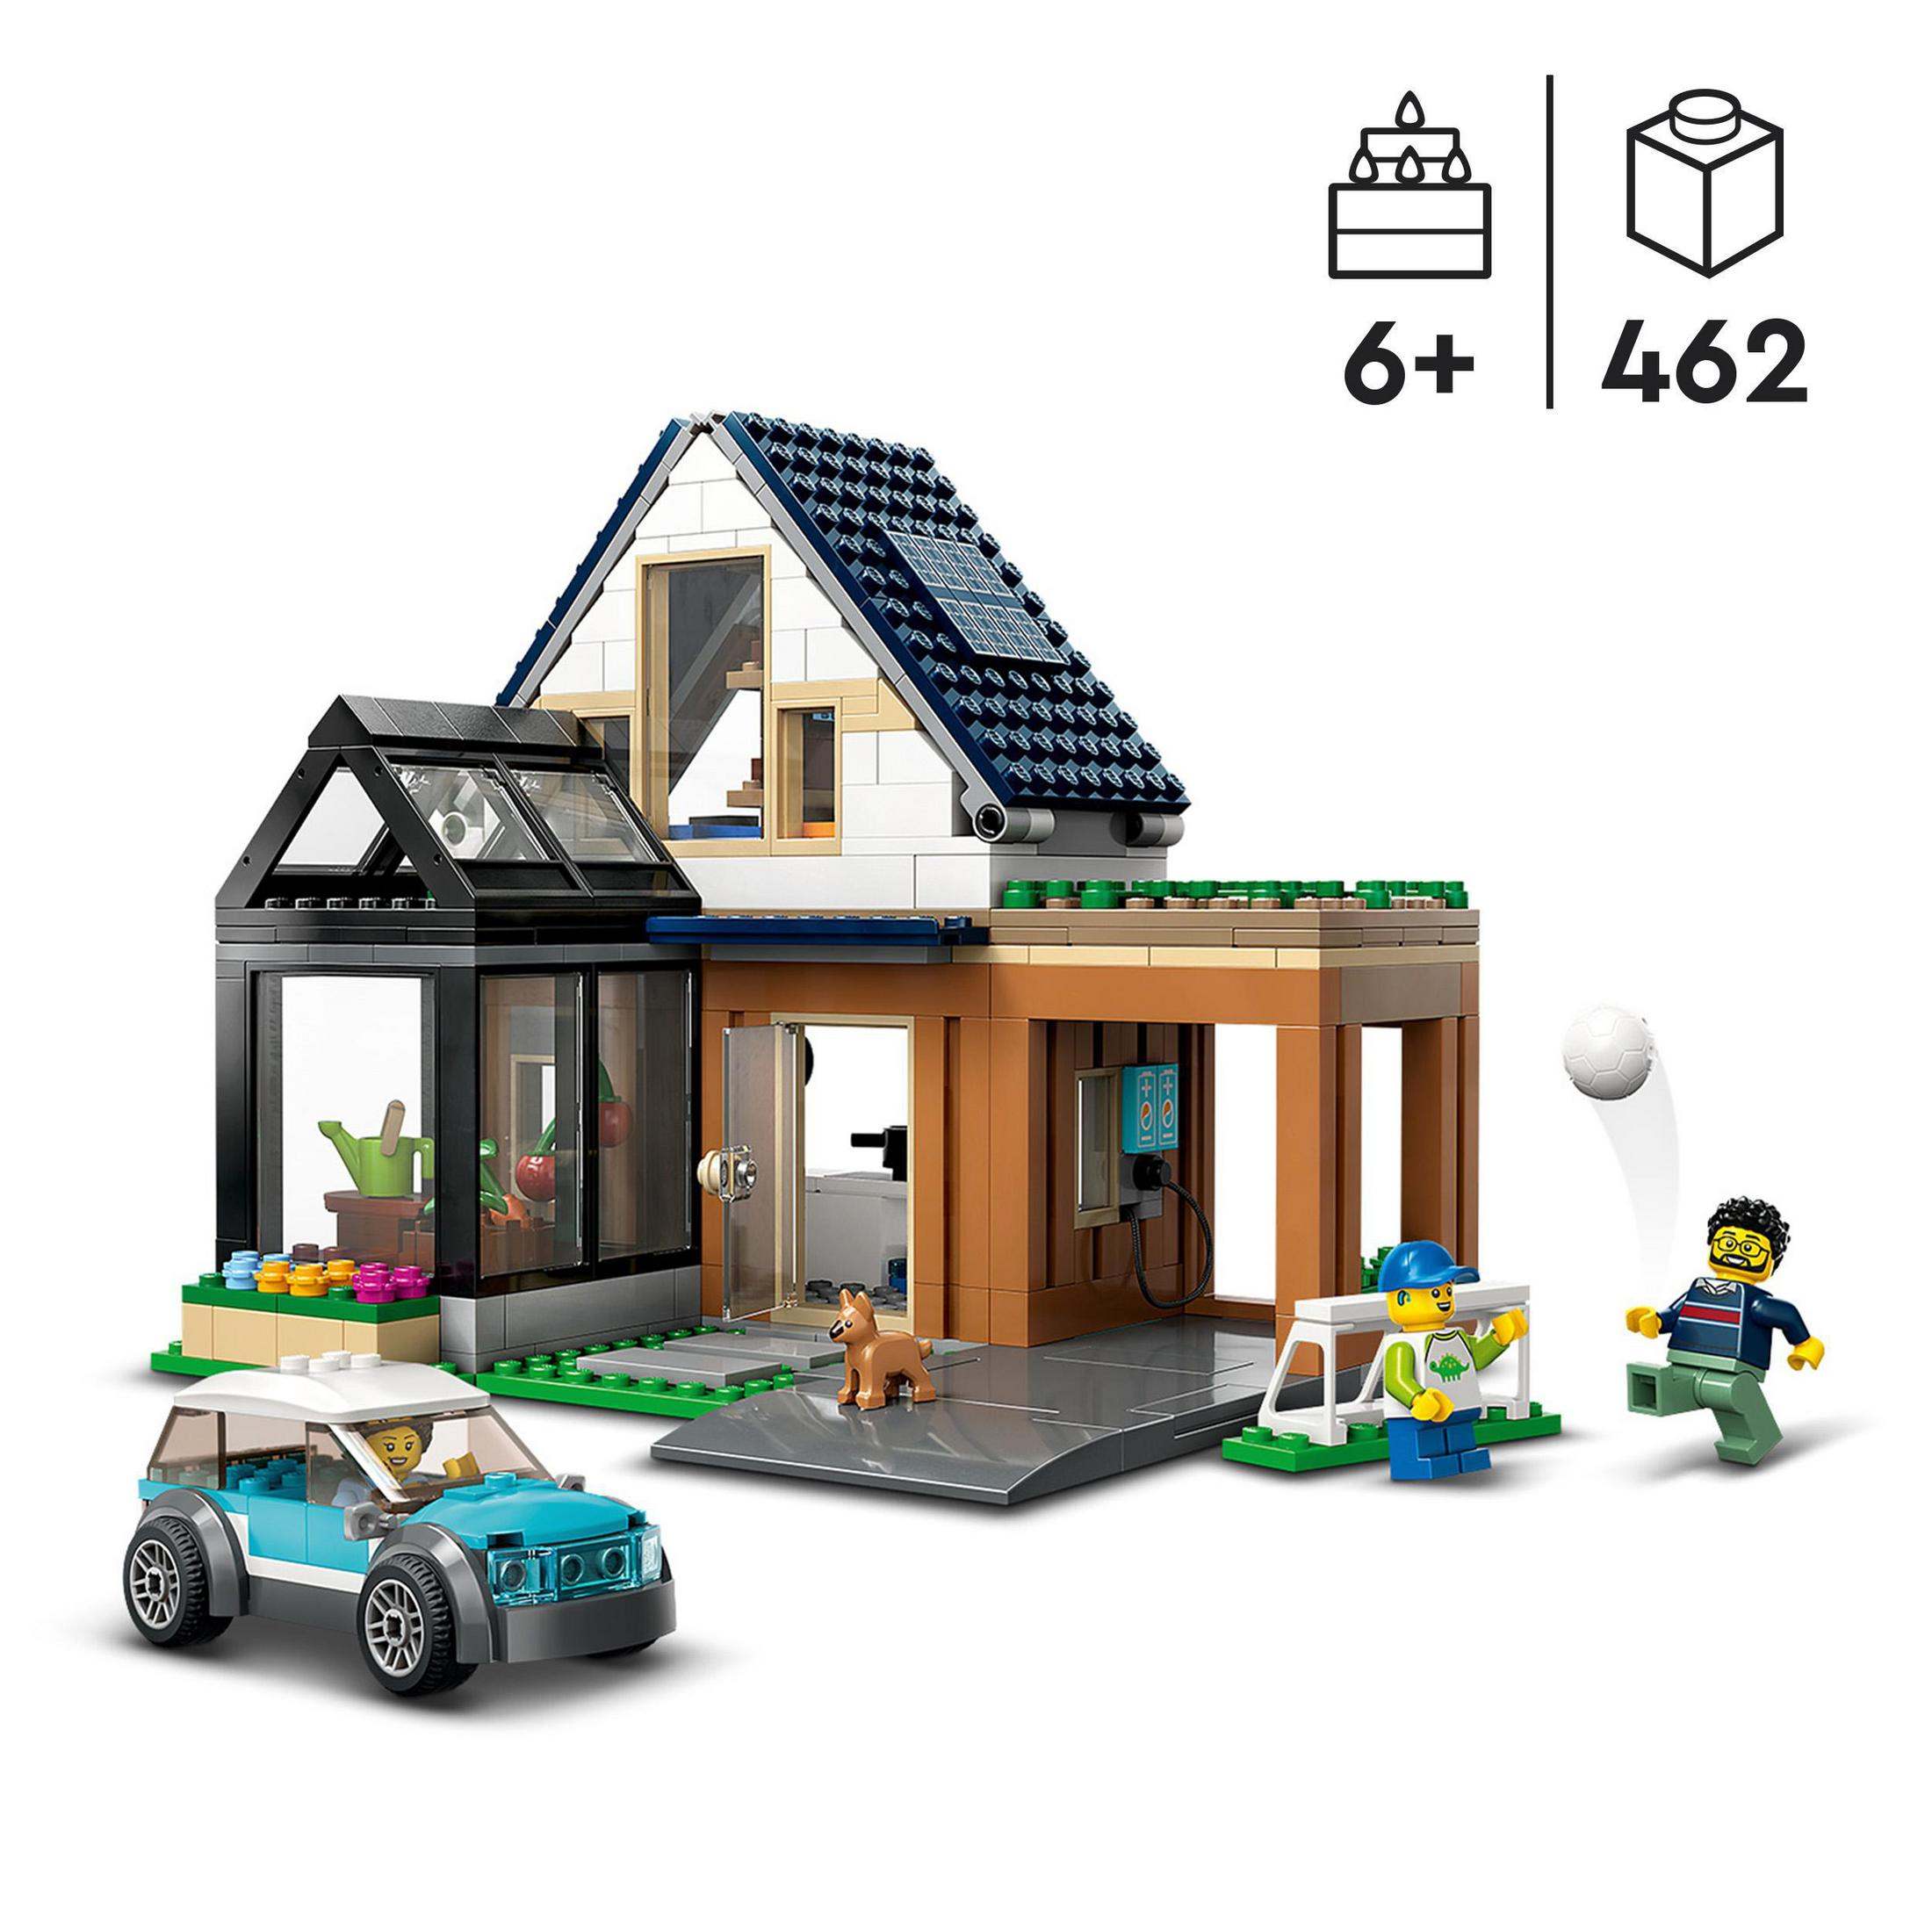 LEGO 60398 FAMILIENHAUS MIT ELEKTROAUTO Mehrfarbig Bausatz